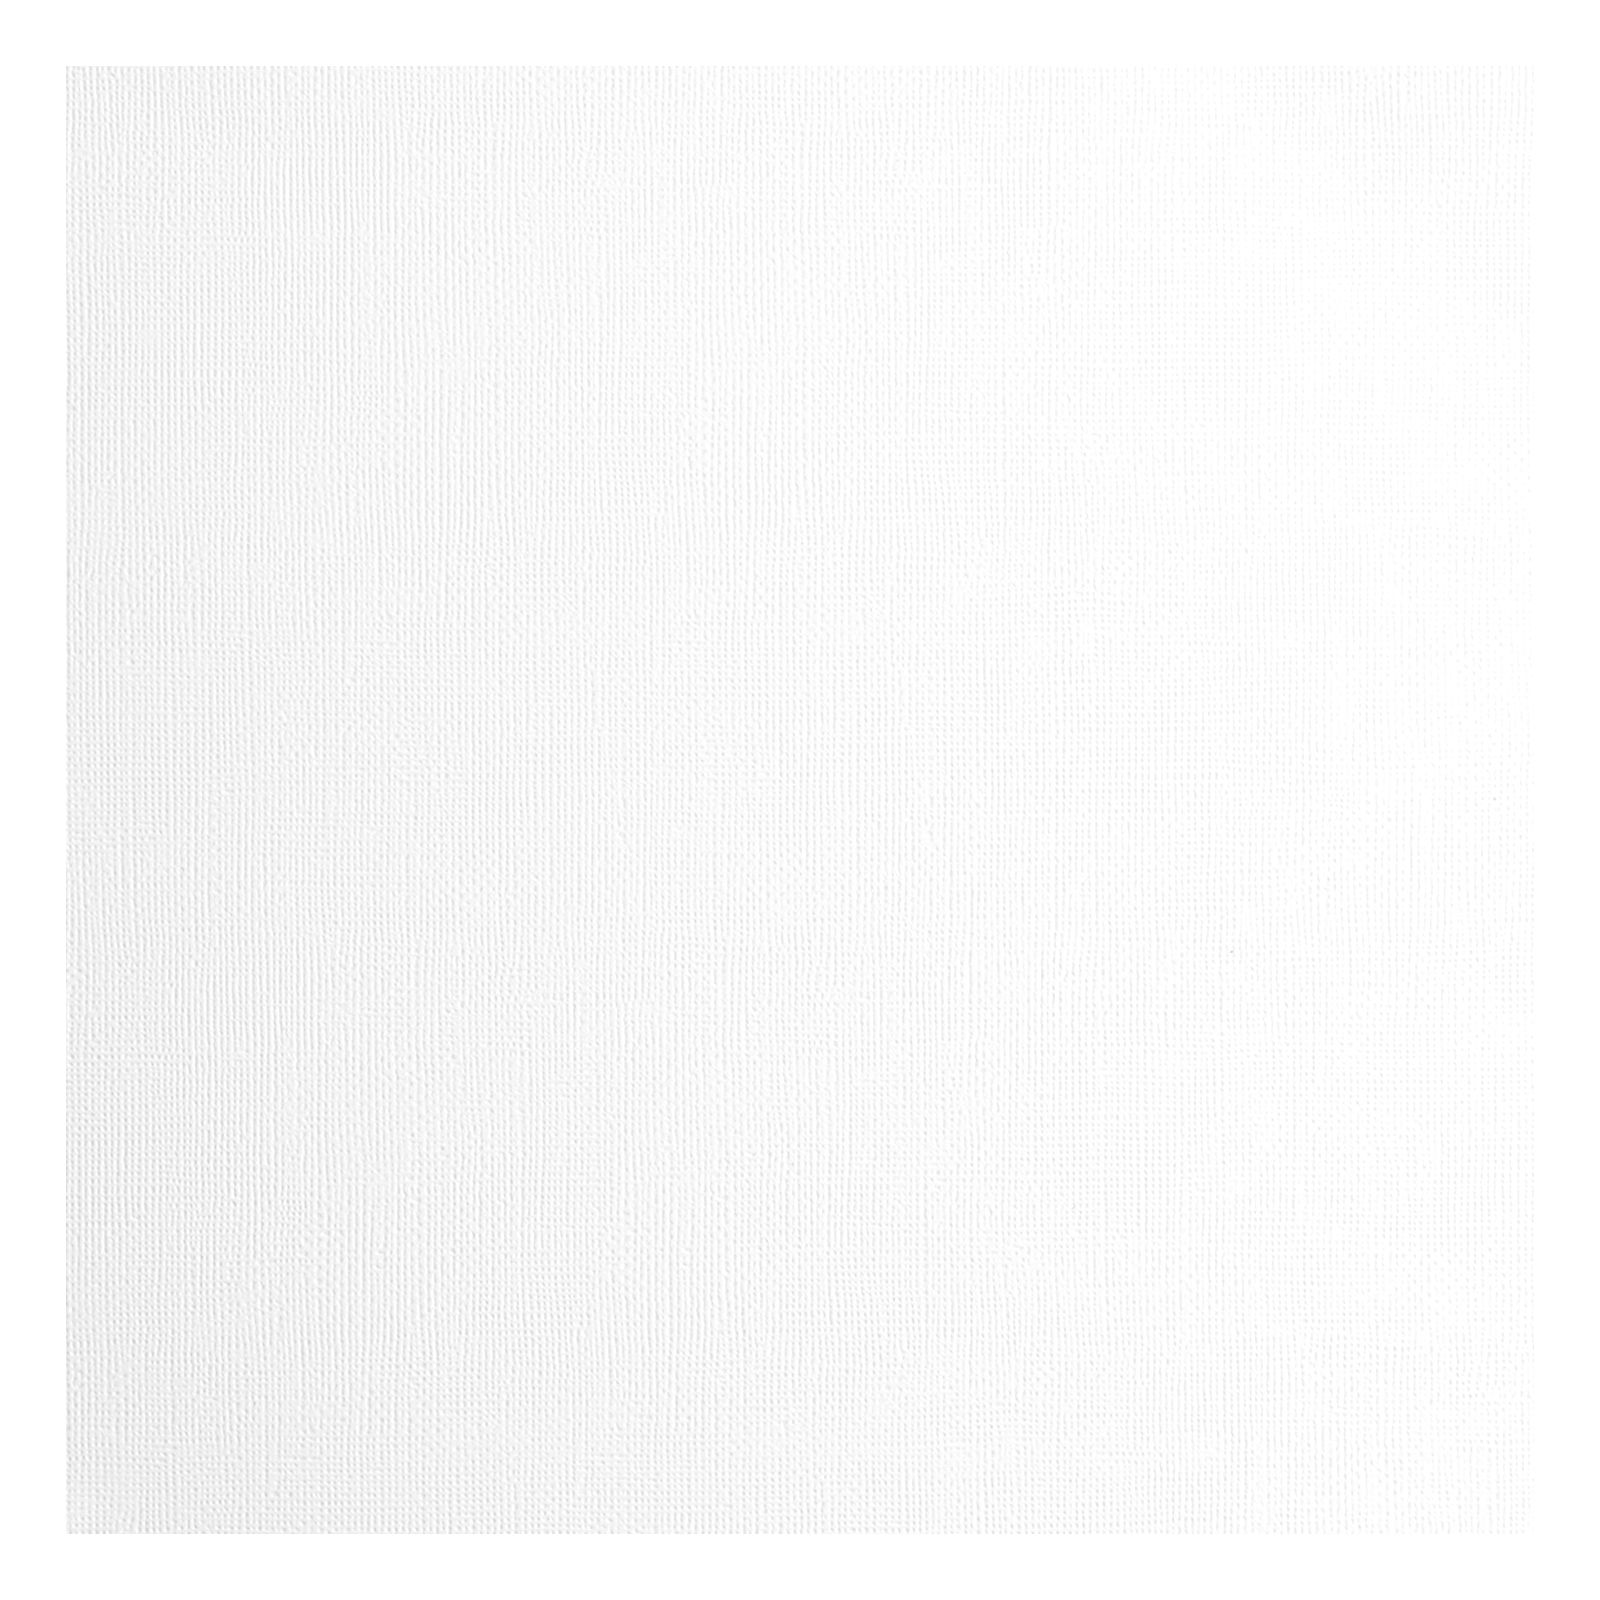 Florence • Cartoncino 216g Testurizzata 30,5x30,5cm White 100x